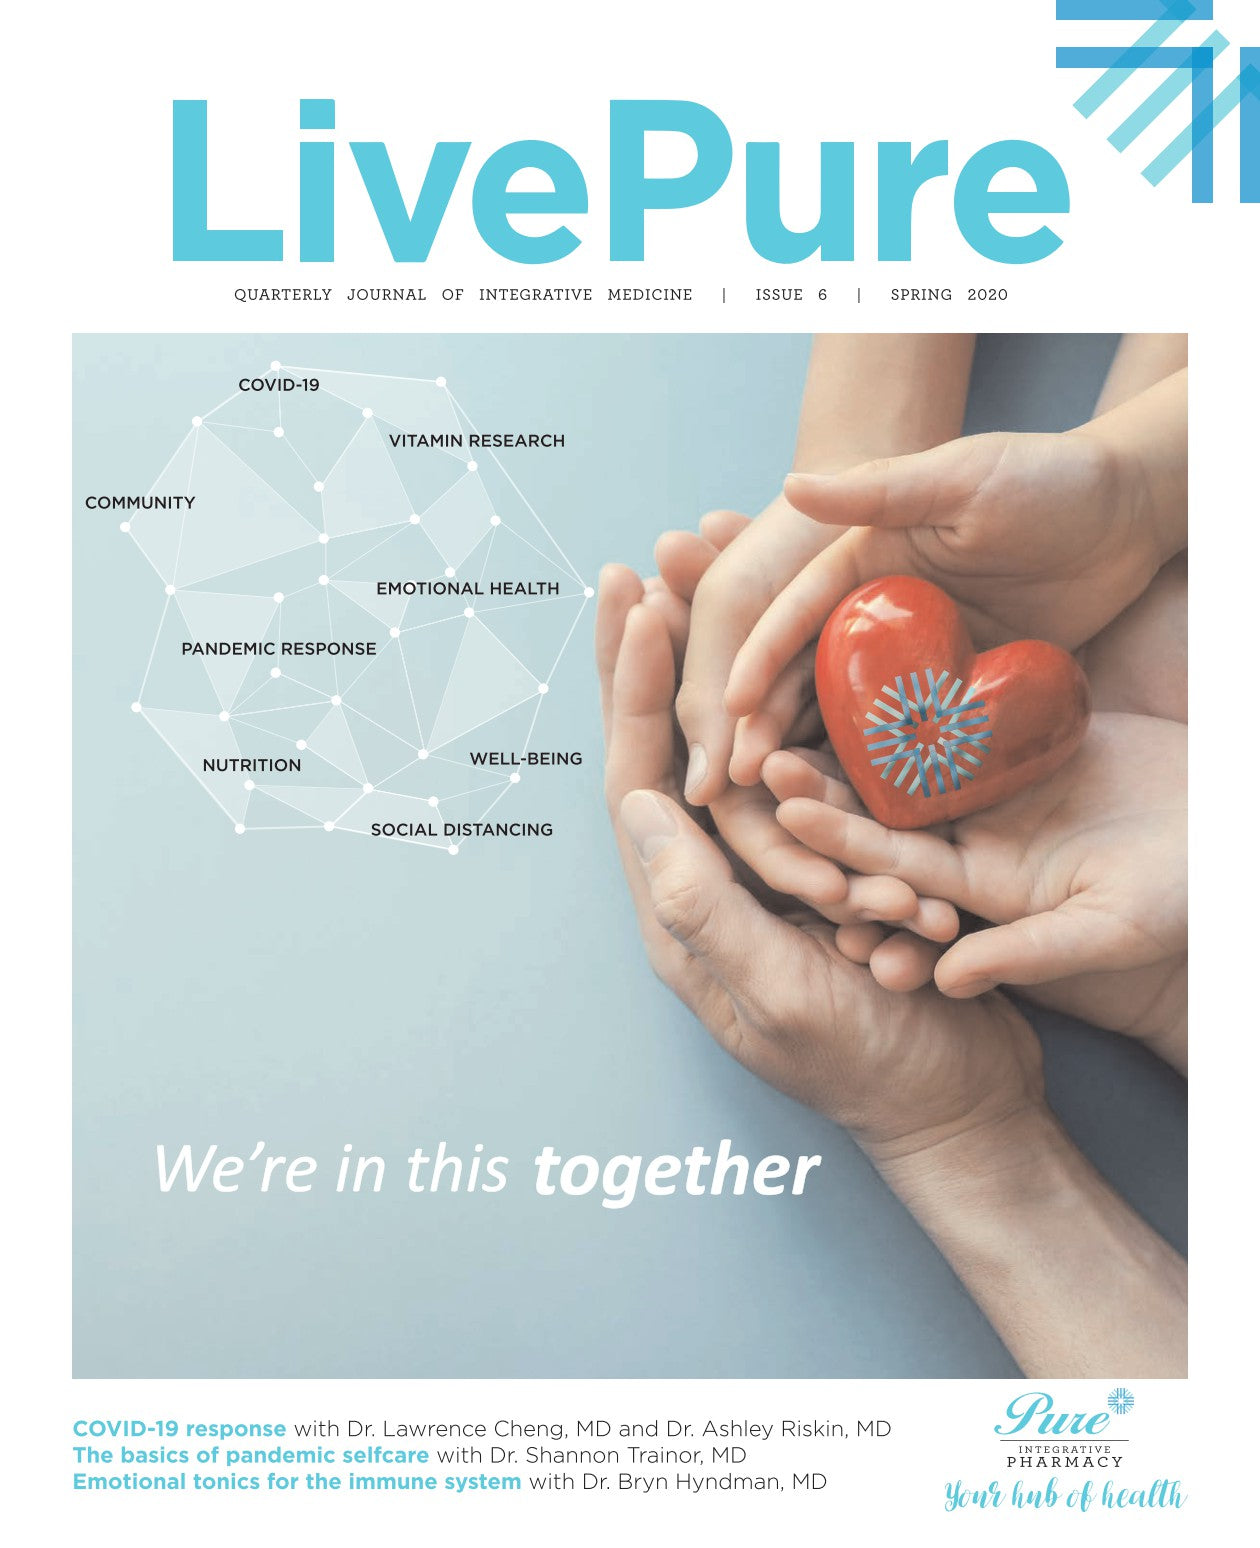 LivePure Quarterly Journal of Integrative Medicine - Spring 2020